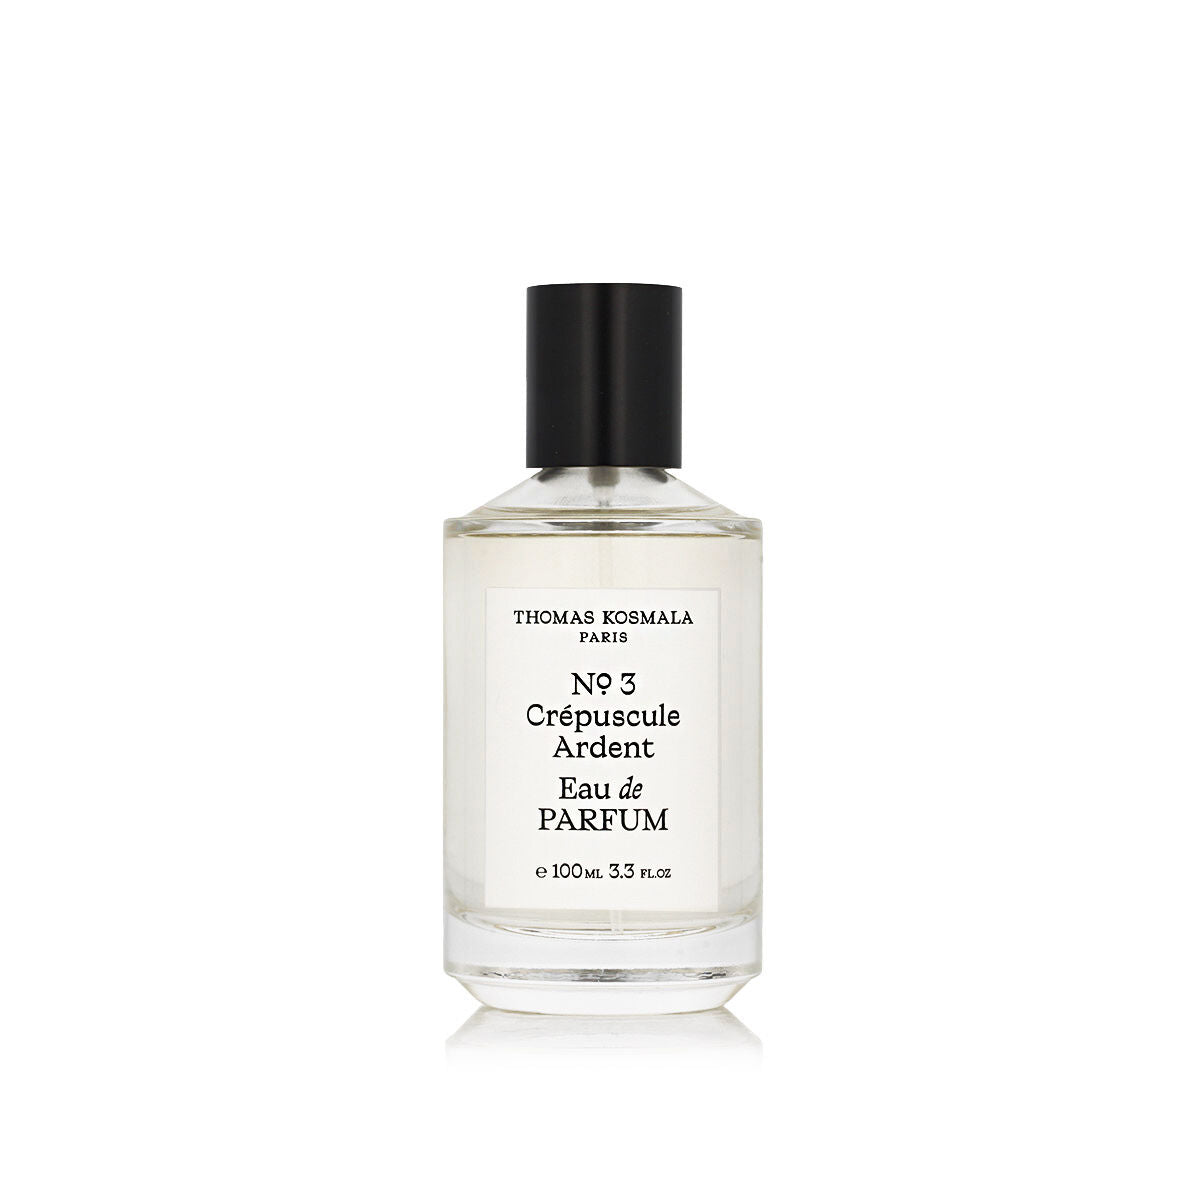 Perfume unisexe Thomas Kosmala No.3 Crépuscule Ardent Edp 100 ml